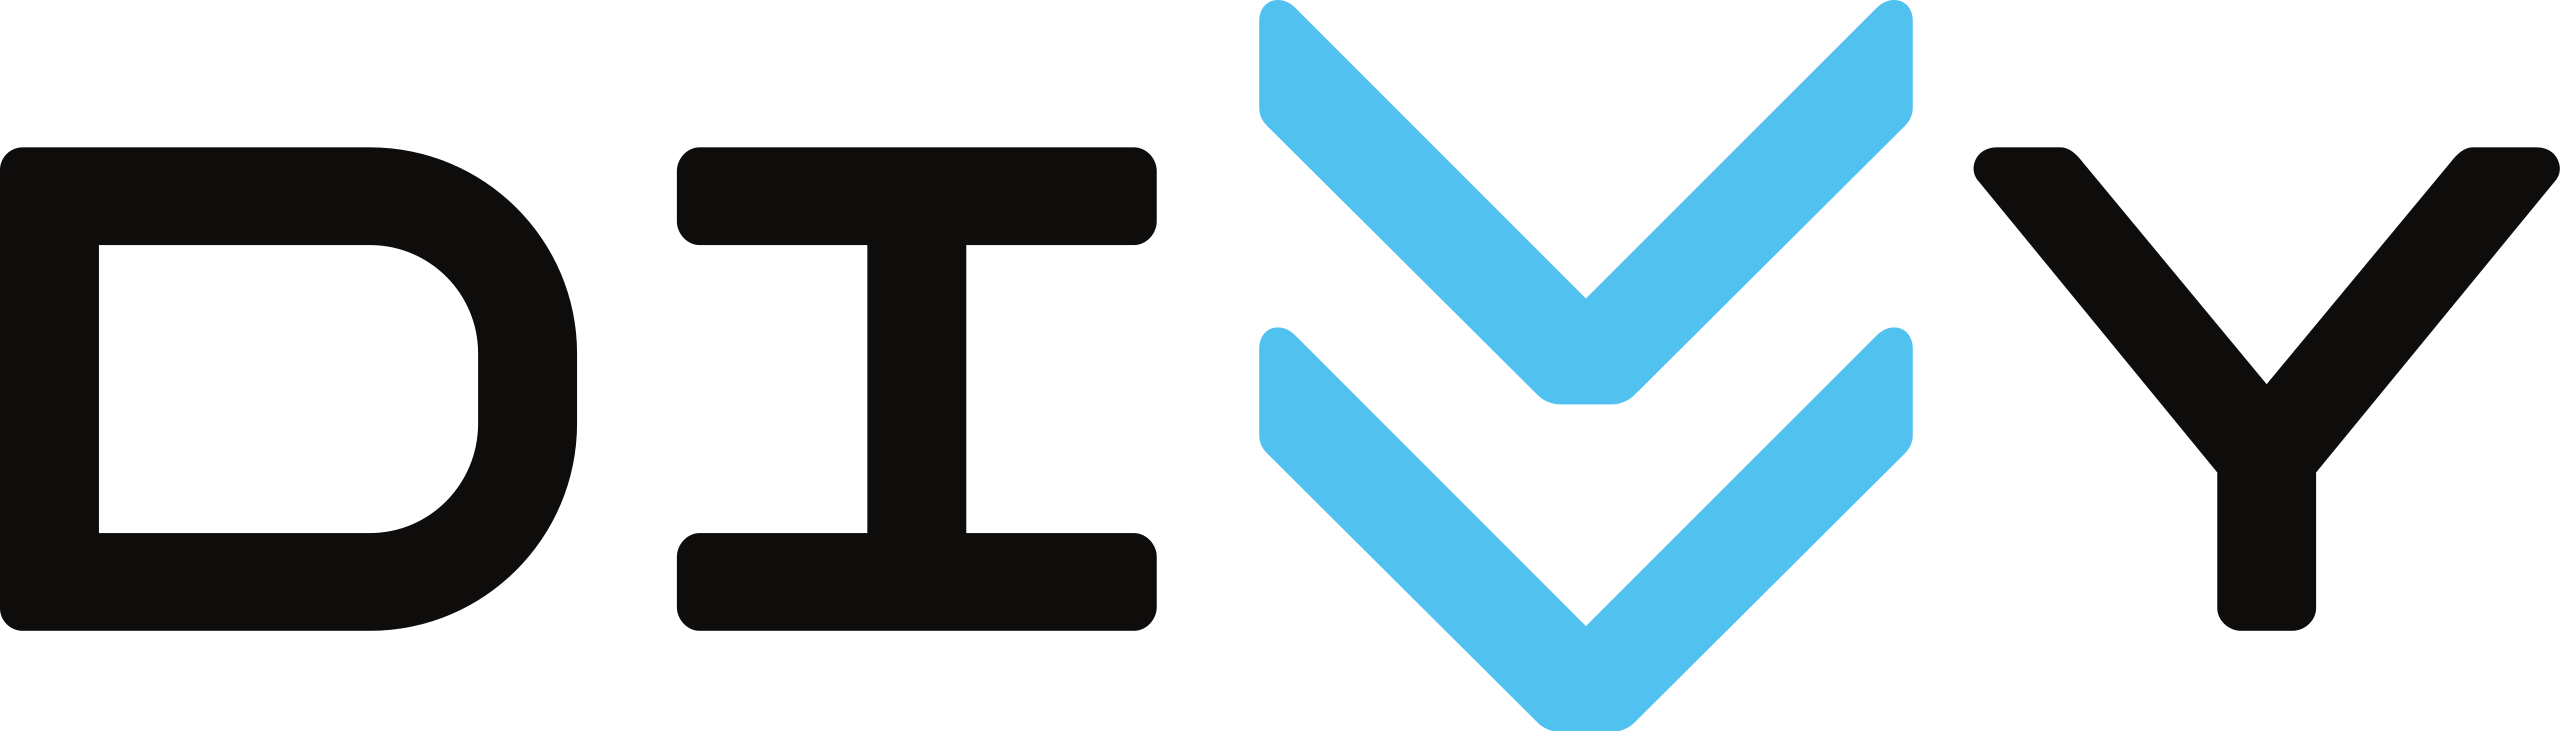 Divi (DIVI) Logo PNG vector in SVG, PDF, AI, CDR format